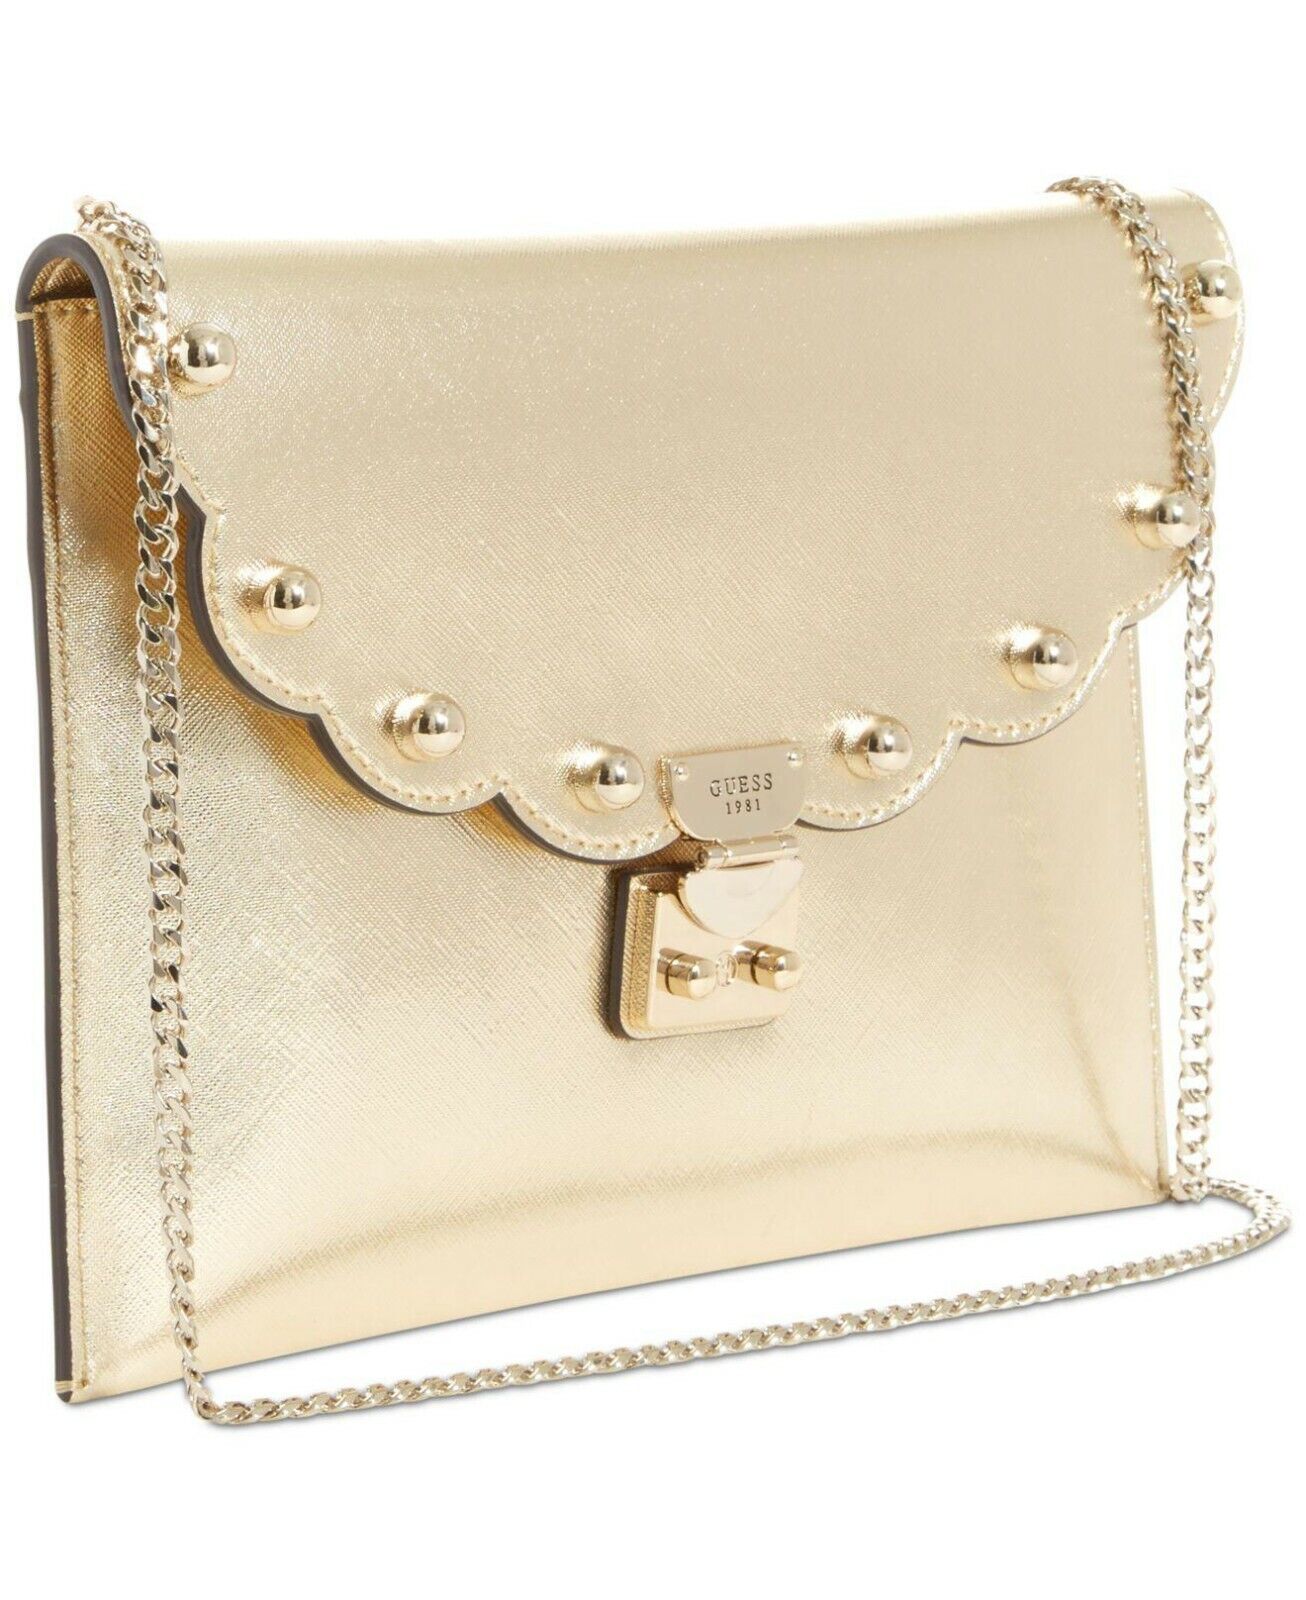 Guess  Fall In Love Clutch Handbag Metallic Studded Clutch Crossbody NWT $78